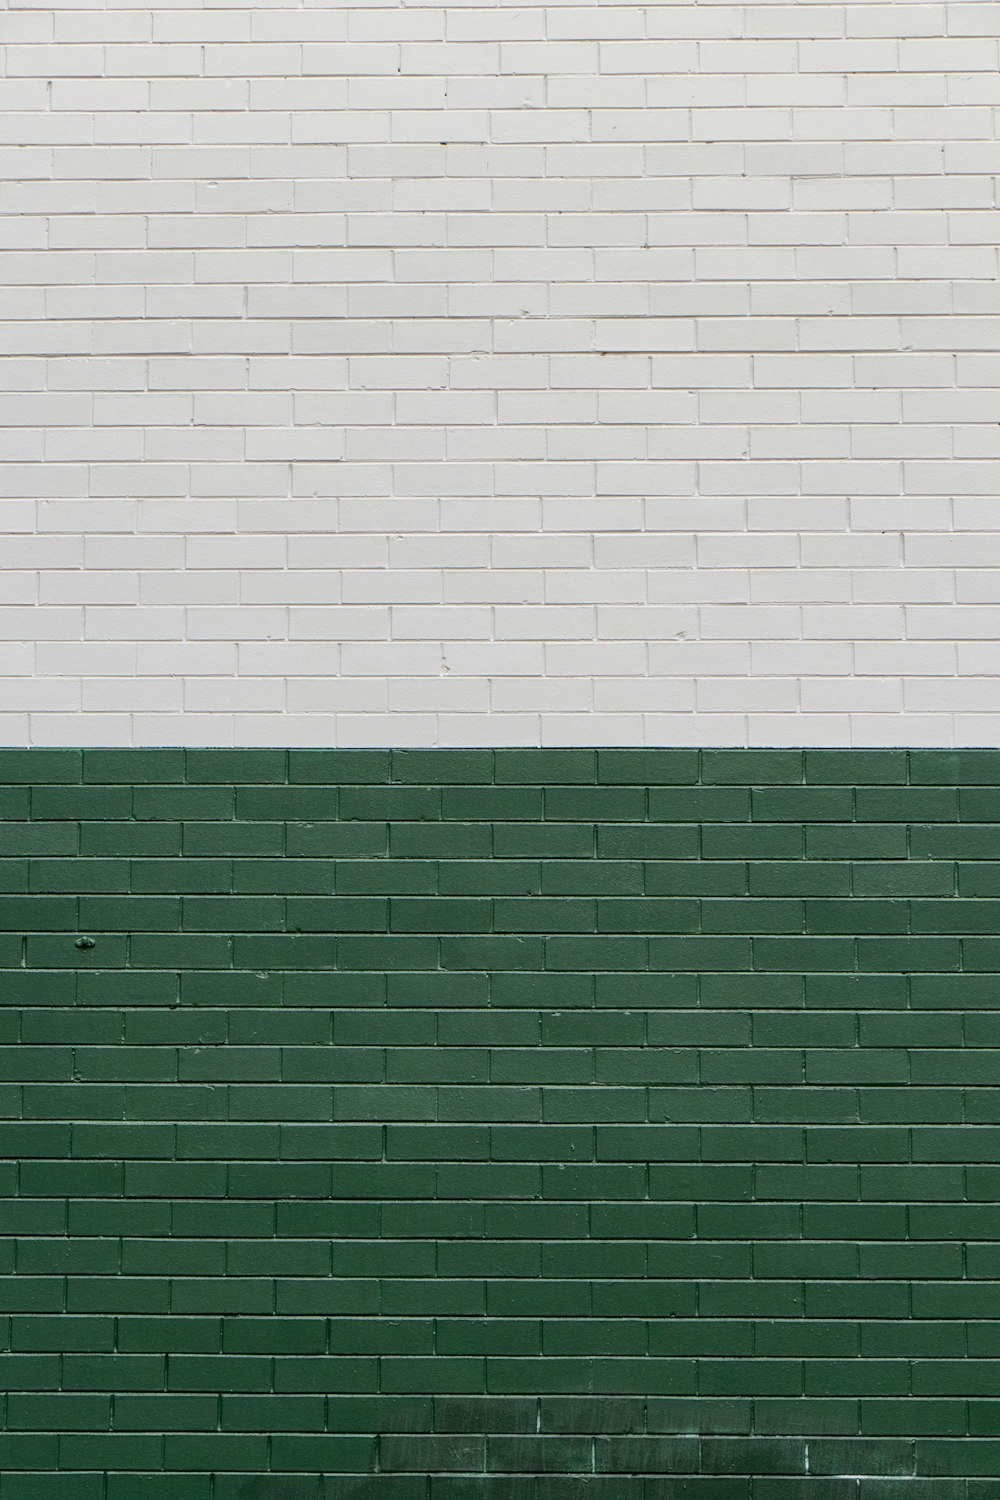 Mur peint en vert et blanc